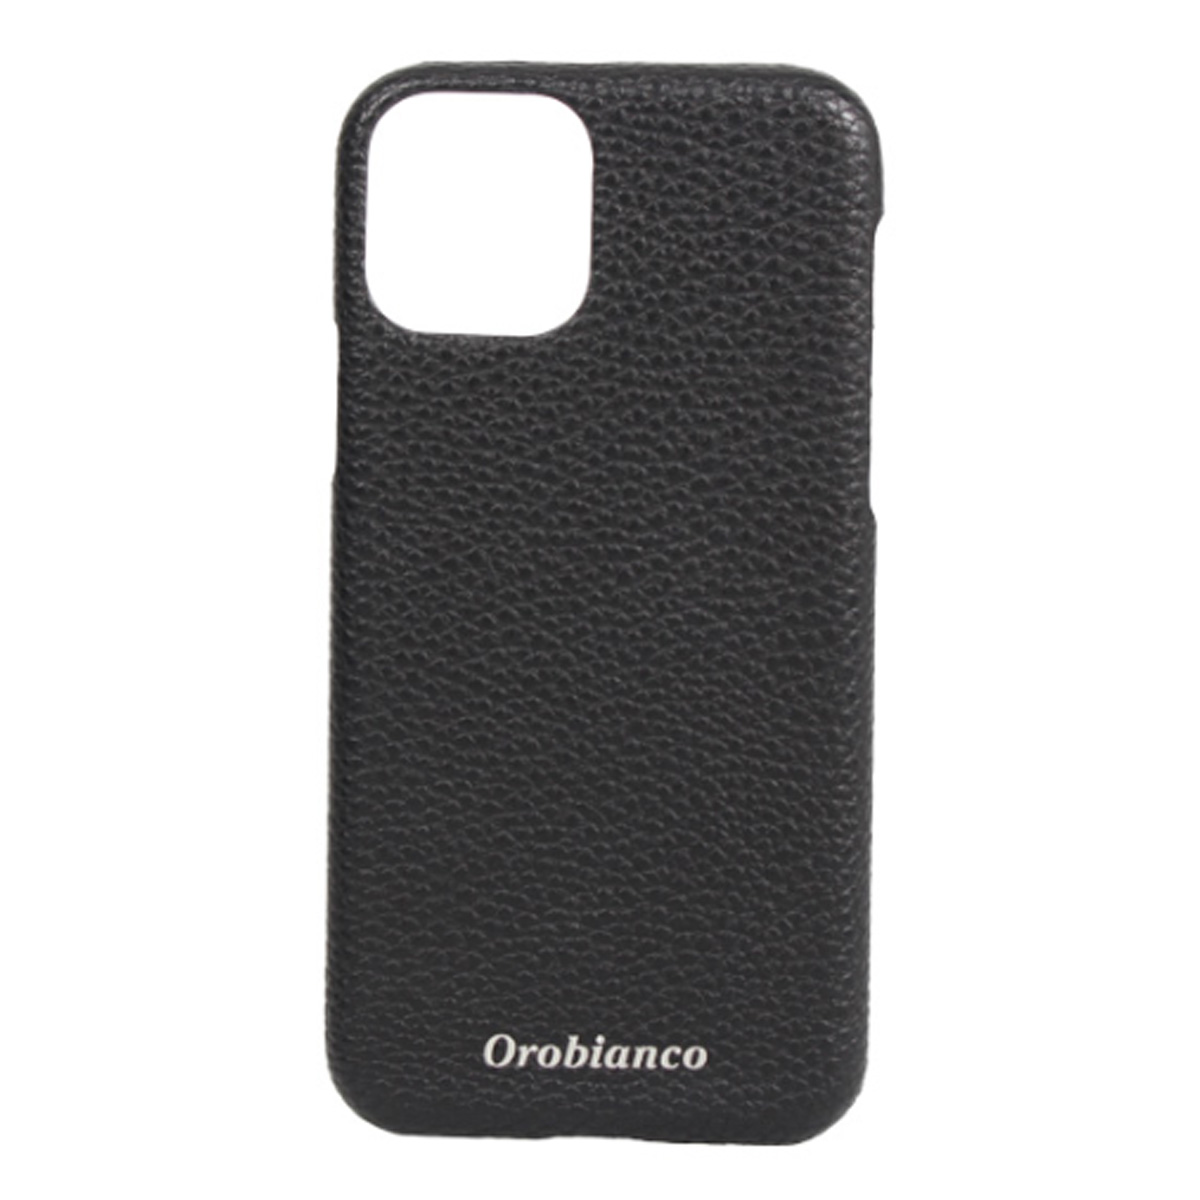 Orobianco オロビアンコ iPhone11 ケース スマホ 携帯 アイフォン メンズ レディ...